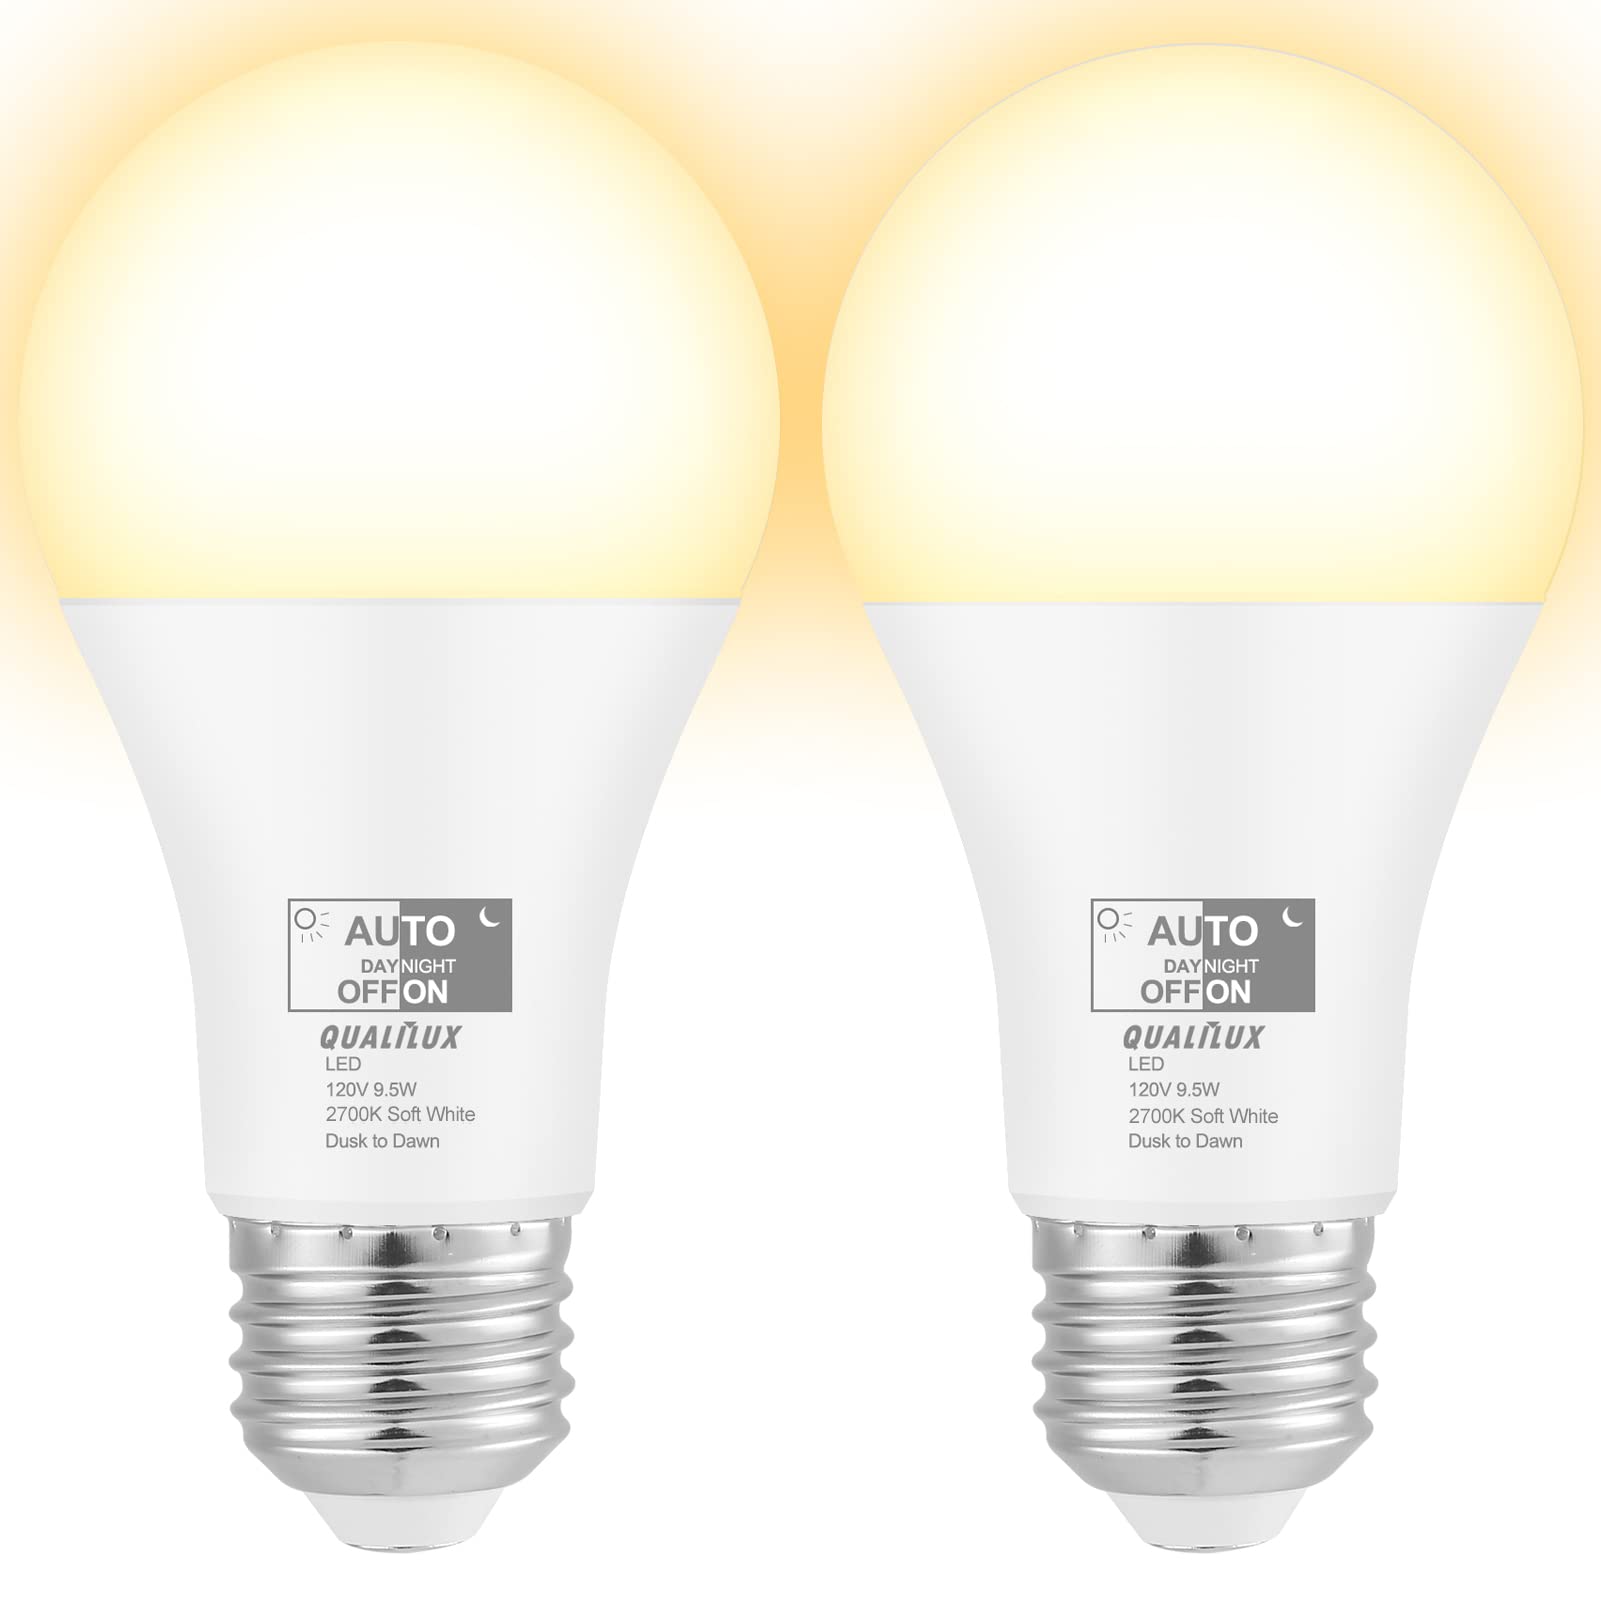 Qualilux Dusk to Dawn Light Bulbs 60W Equivalent, A19, 850LM, Soft White 2700K, 360degree Light Sensing LED Bulb Outdoor, Auto O